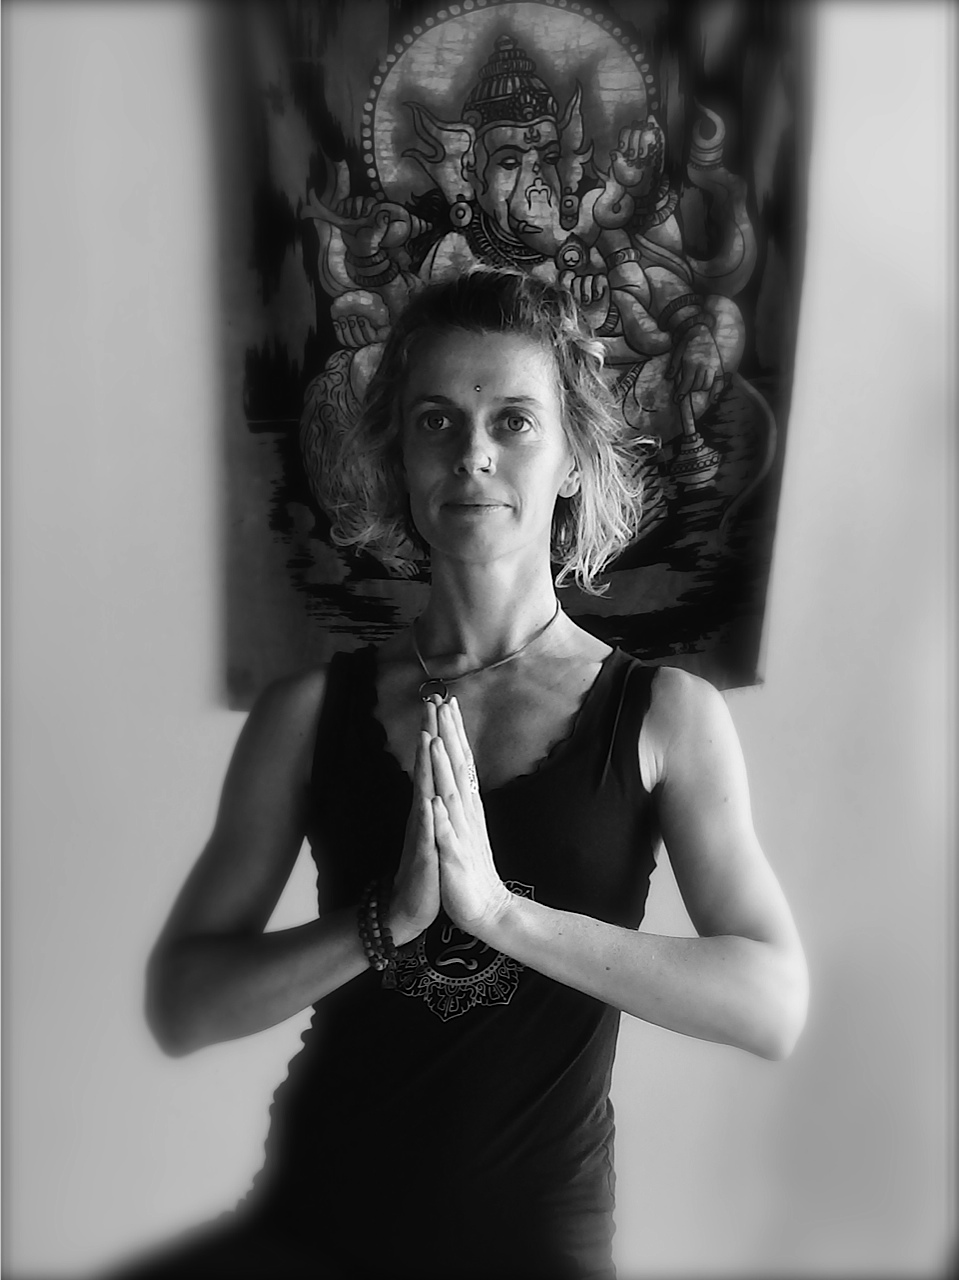 Santosha Massage & Yoga |  | 126 Minsterly Rd, Denmark WA 6333, Australia | 0414651331 OR +61 414 651 331